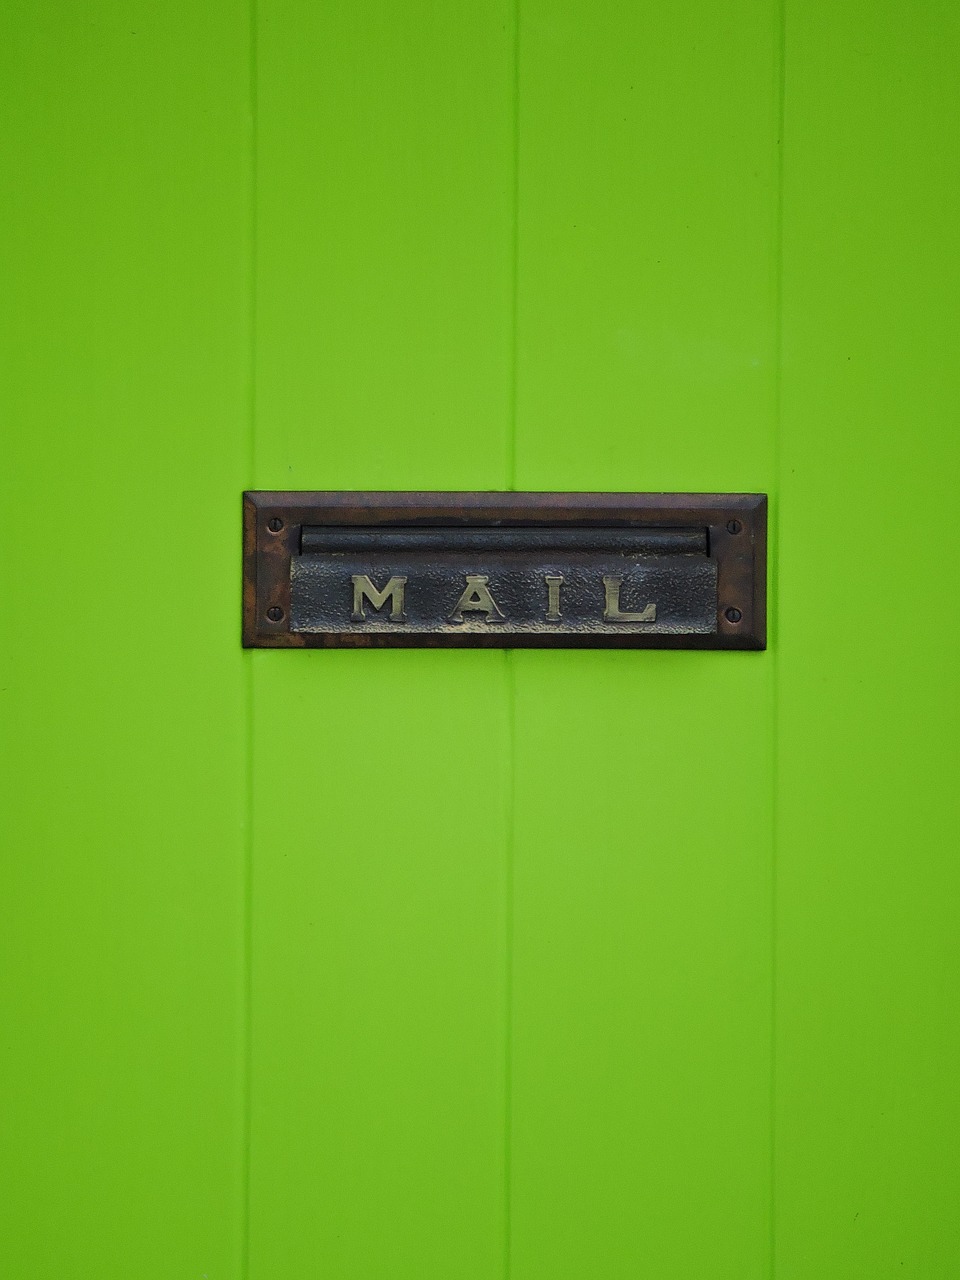 door mail slot mail free photo